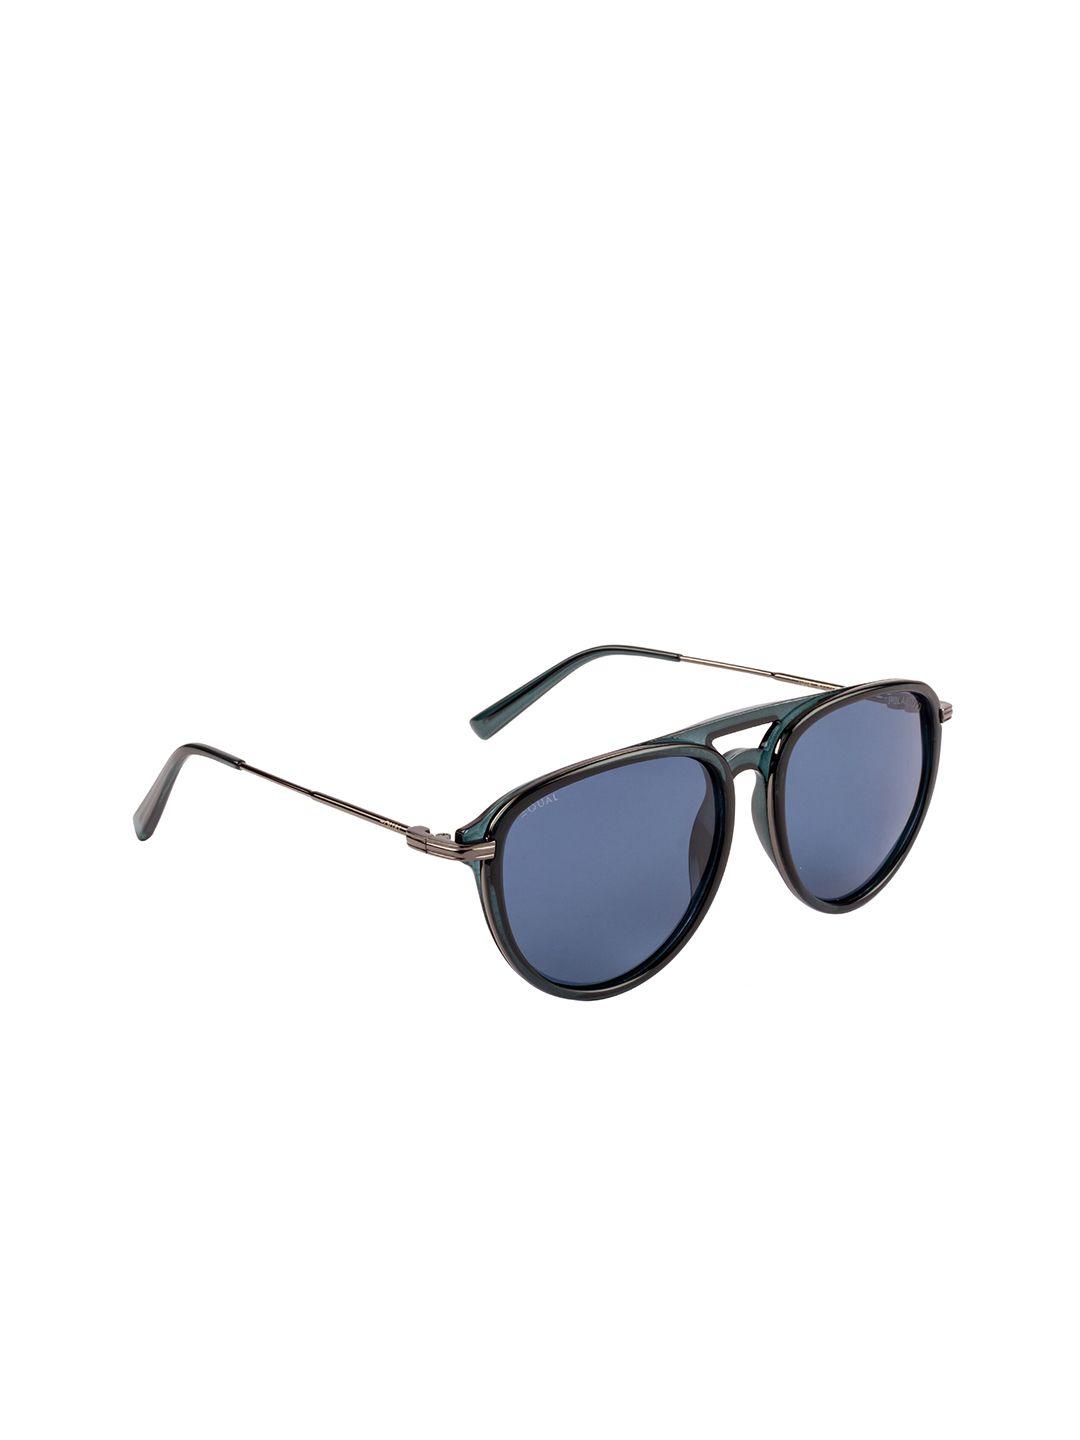 equal unisex blue lens & blue full rim aviator sunglasses 7004 57017-145 c3